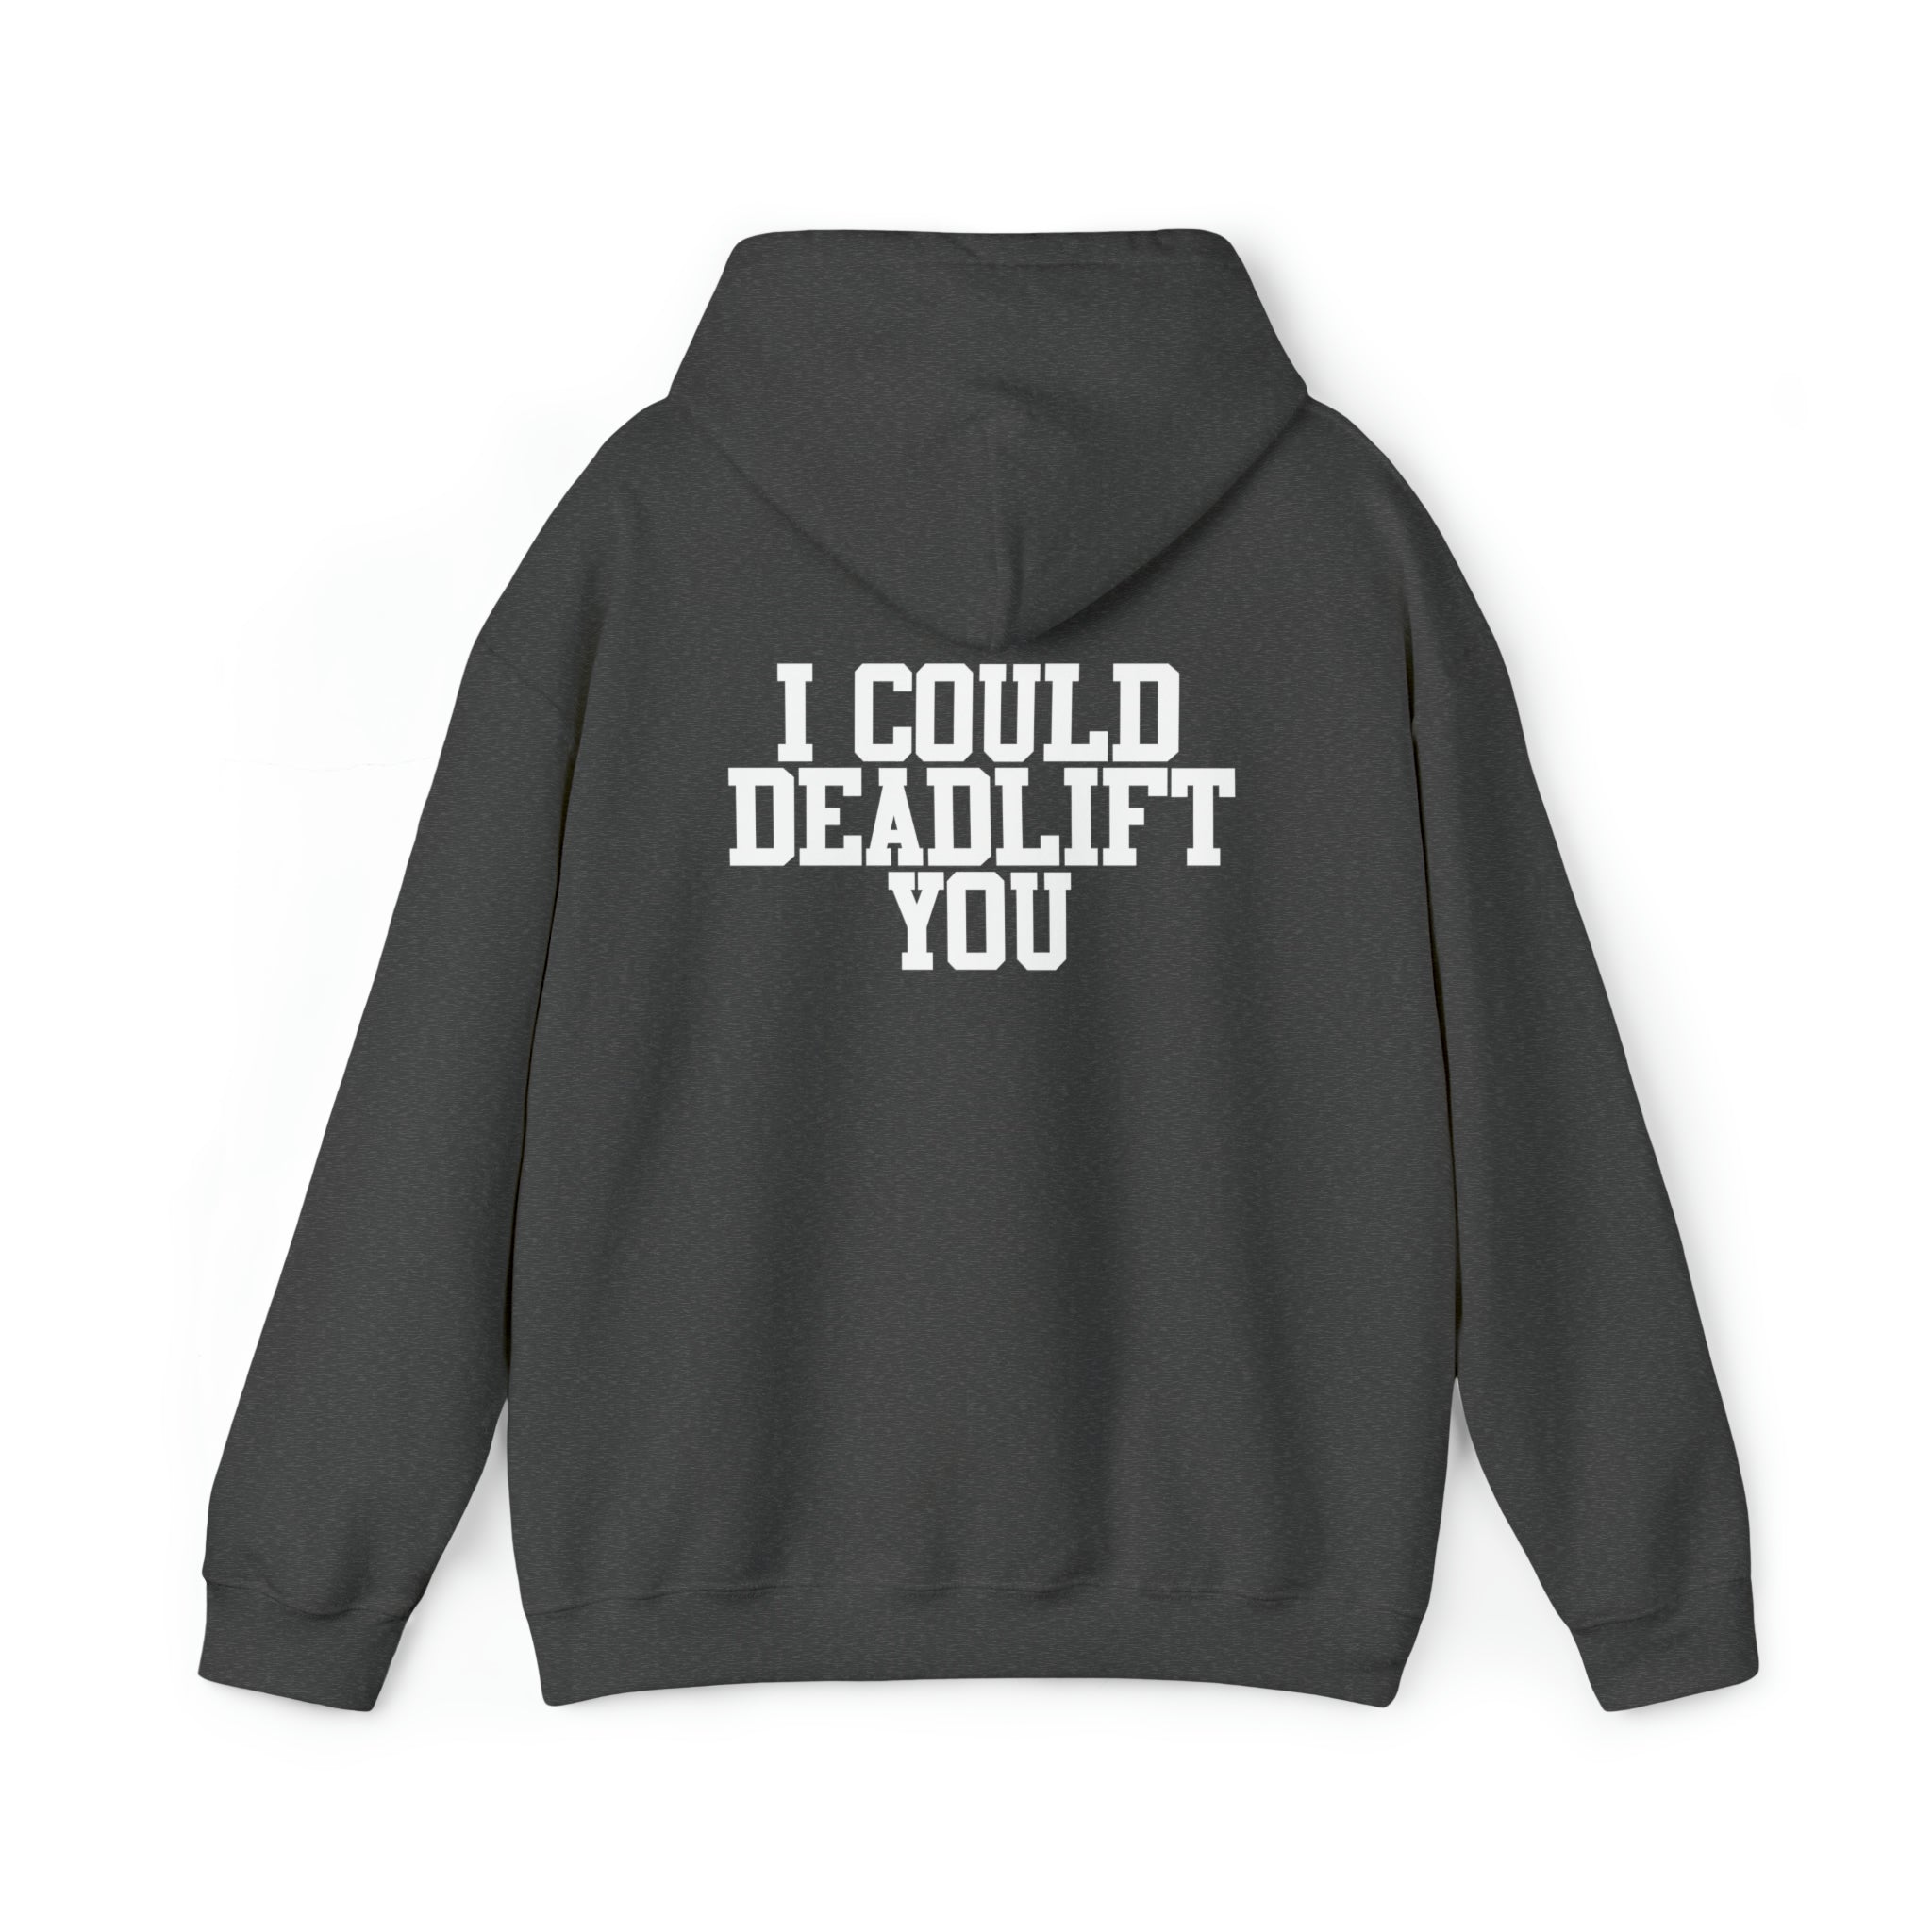 I Could Deadlift You. - Unisex Heavy Blend Hooded Sweatshirt